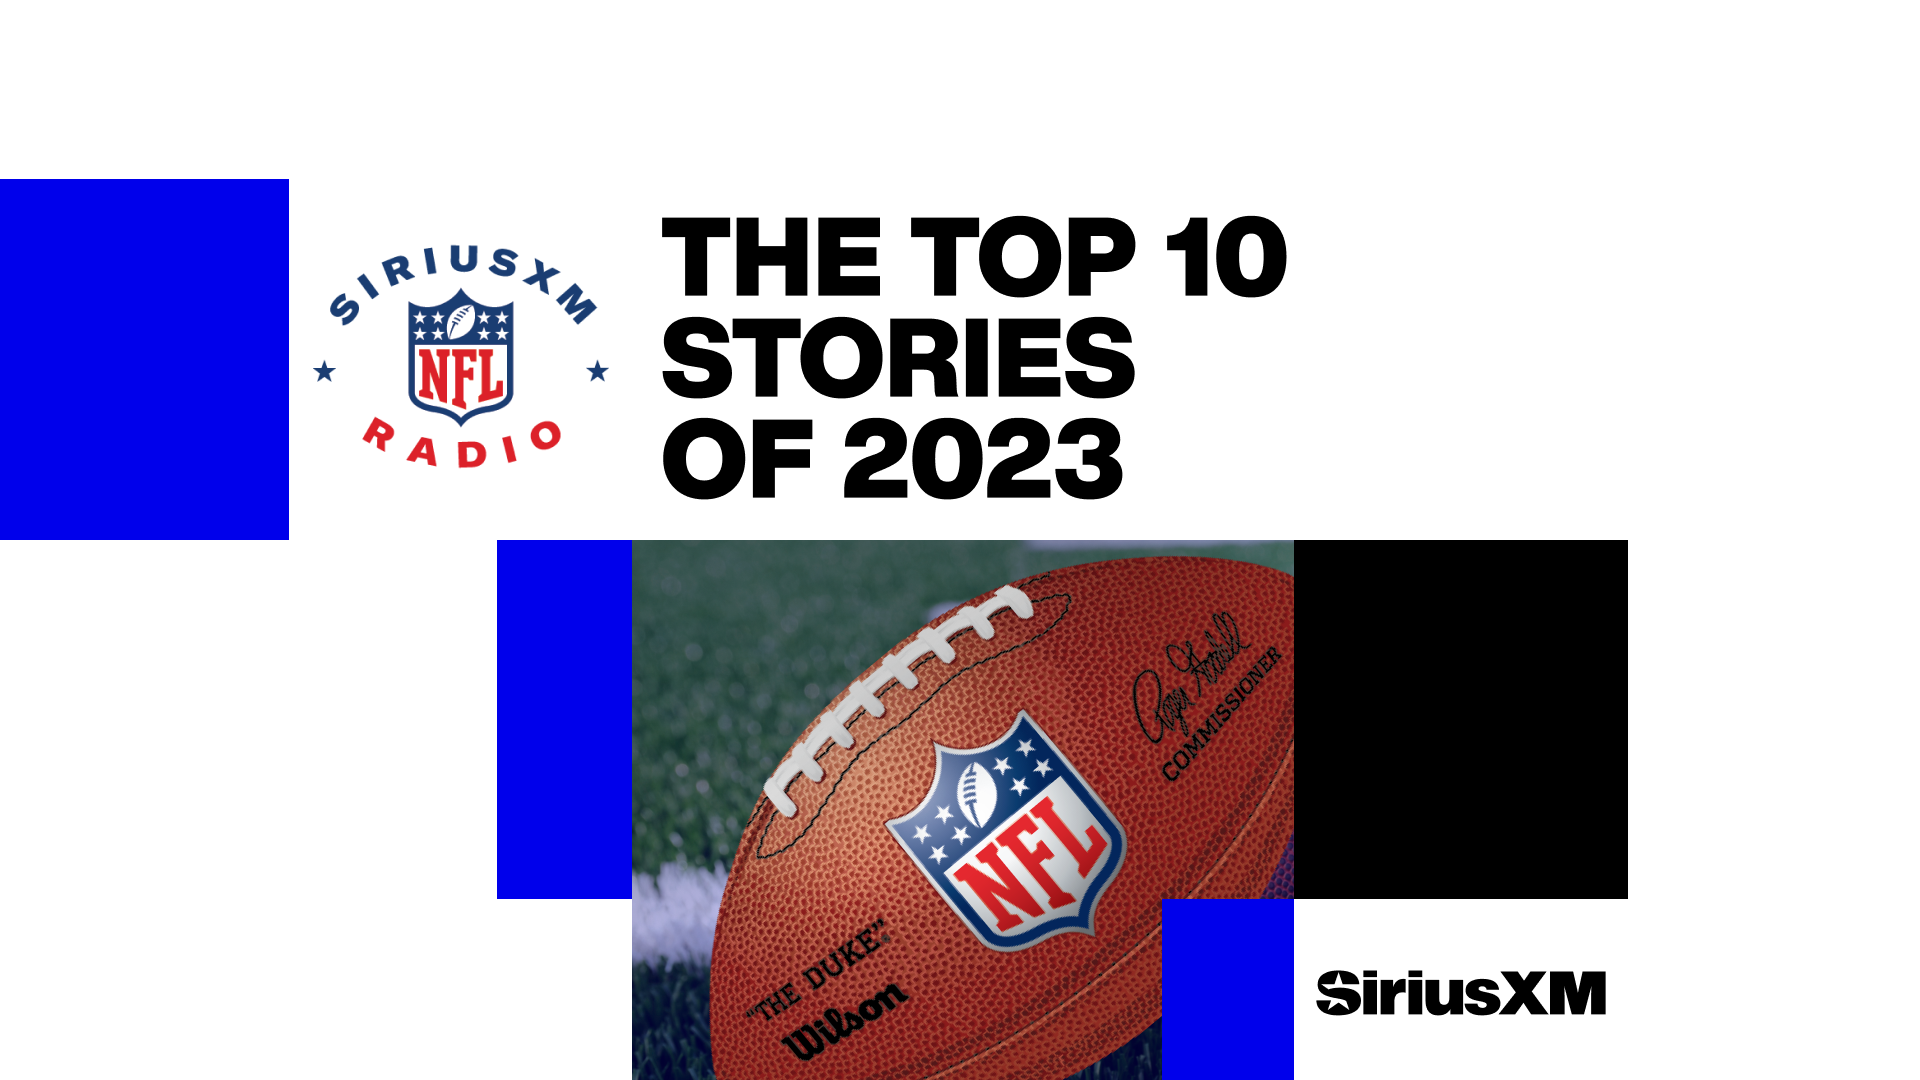 NFL Radio - Top 10 Stories of 2023